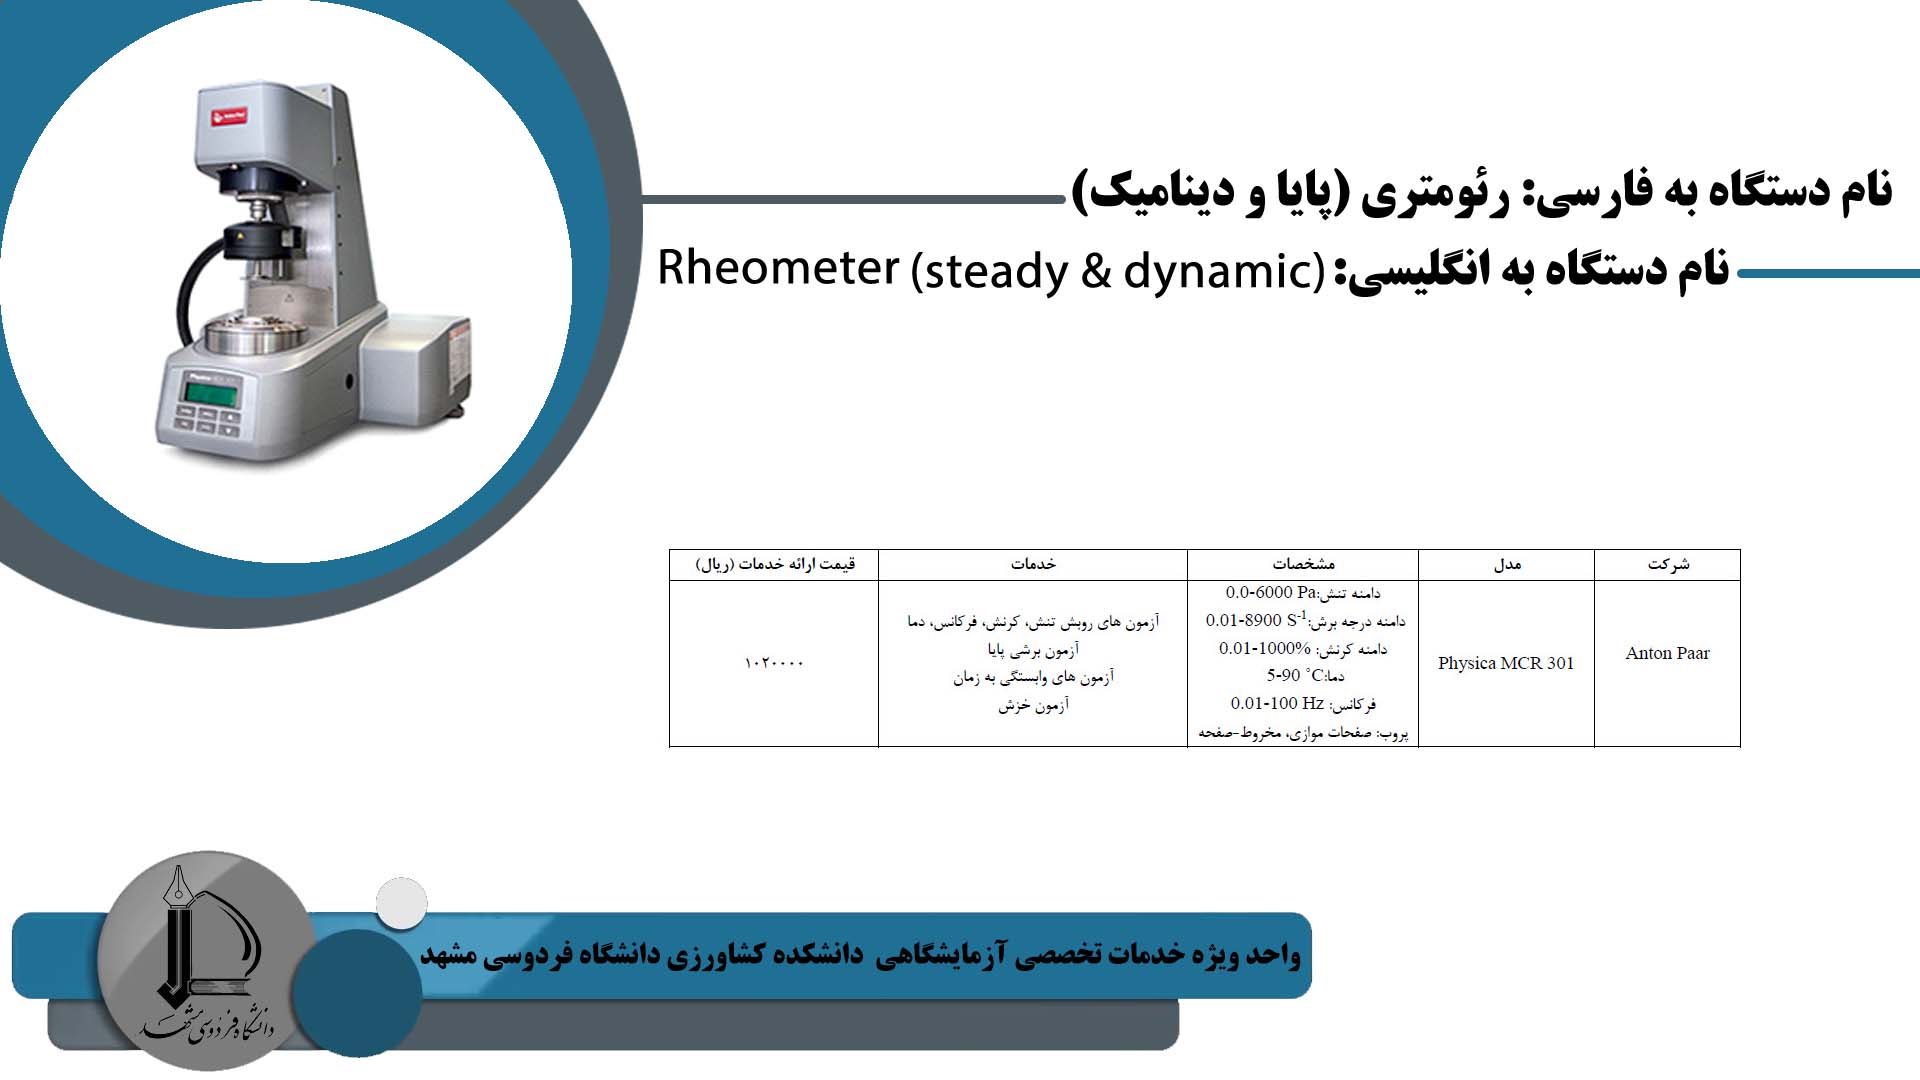 Rheometer